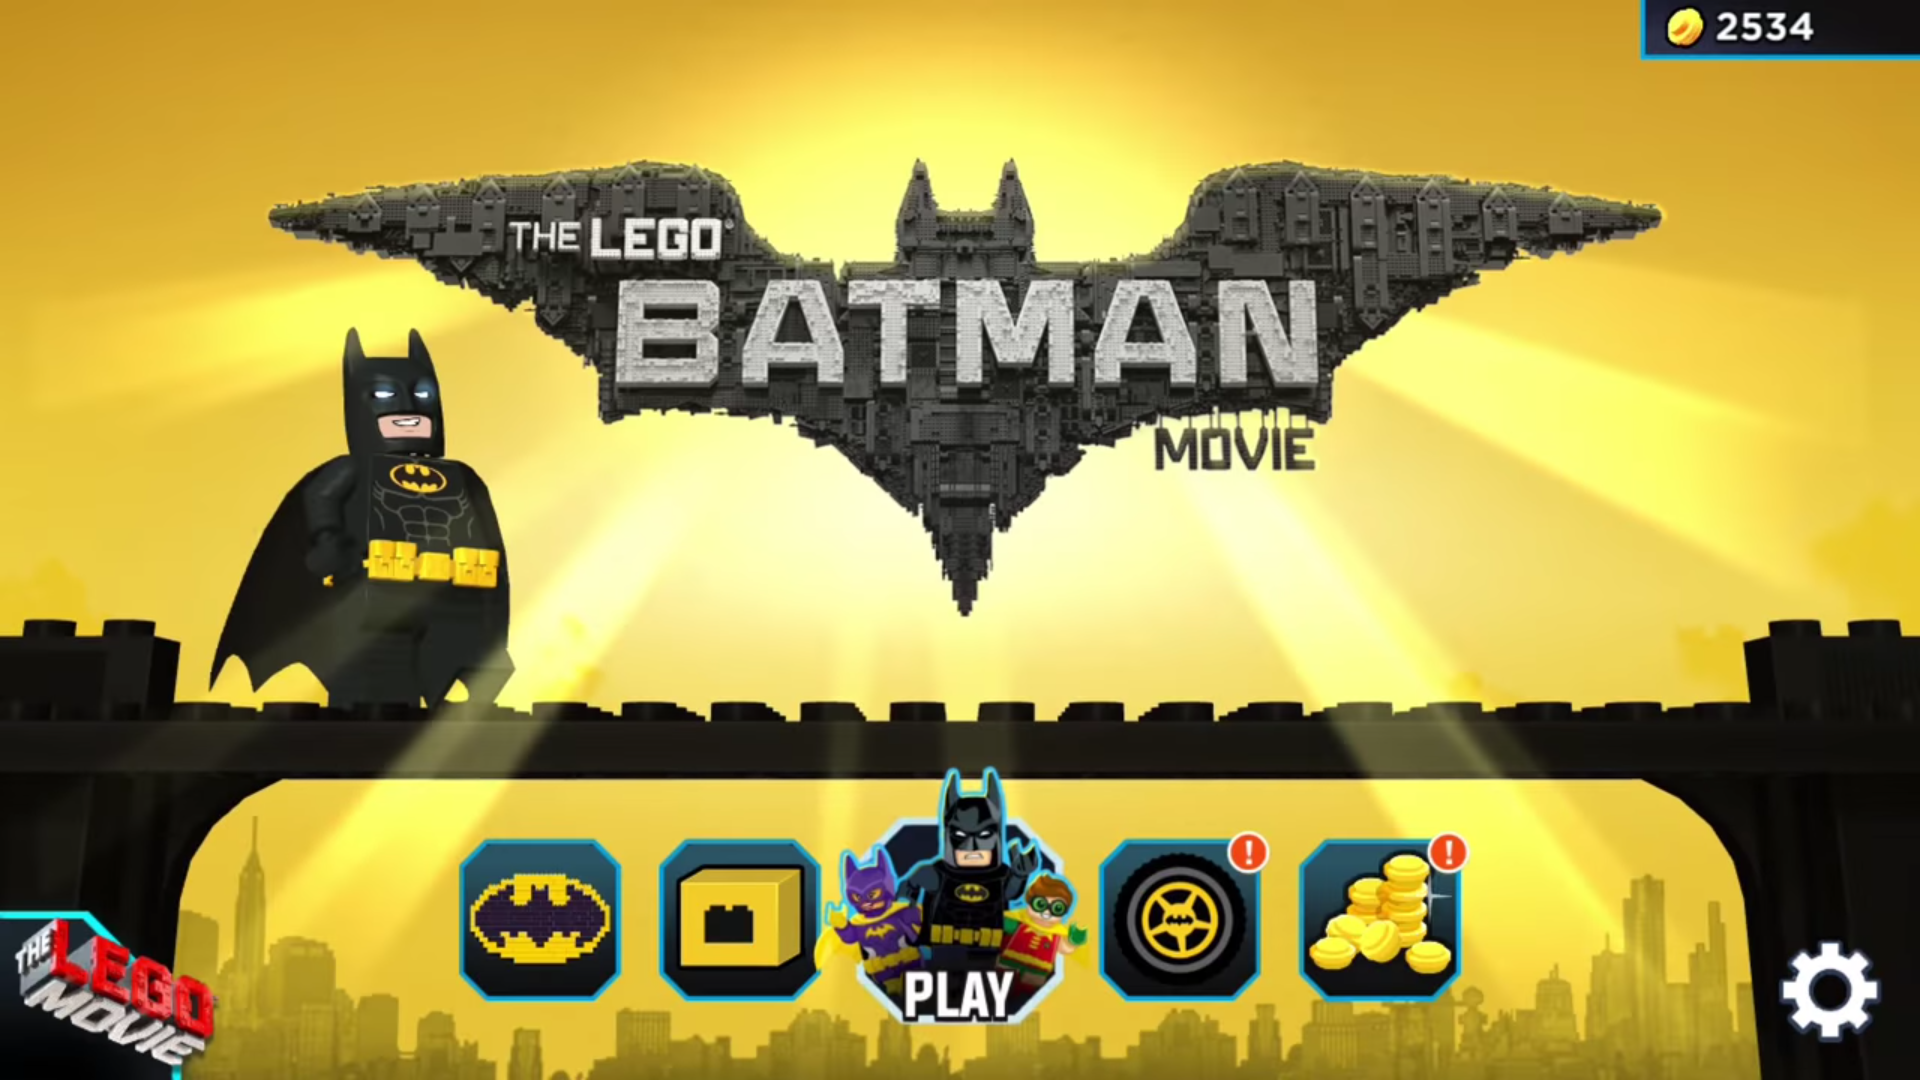 The Batman Universe – Lego Batman Movie Gets App Ahead of Release